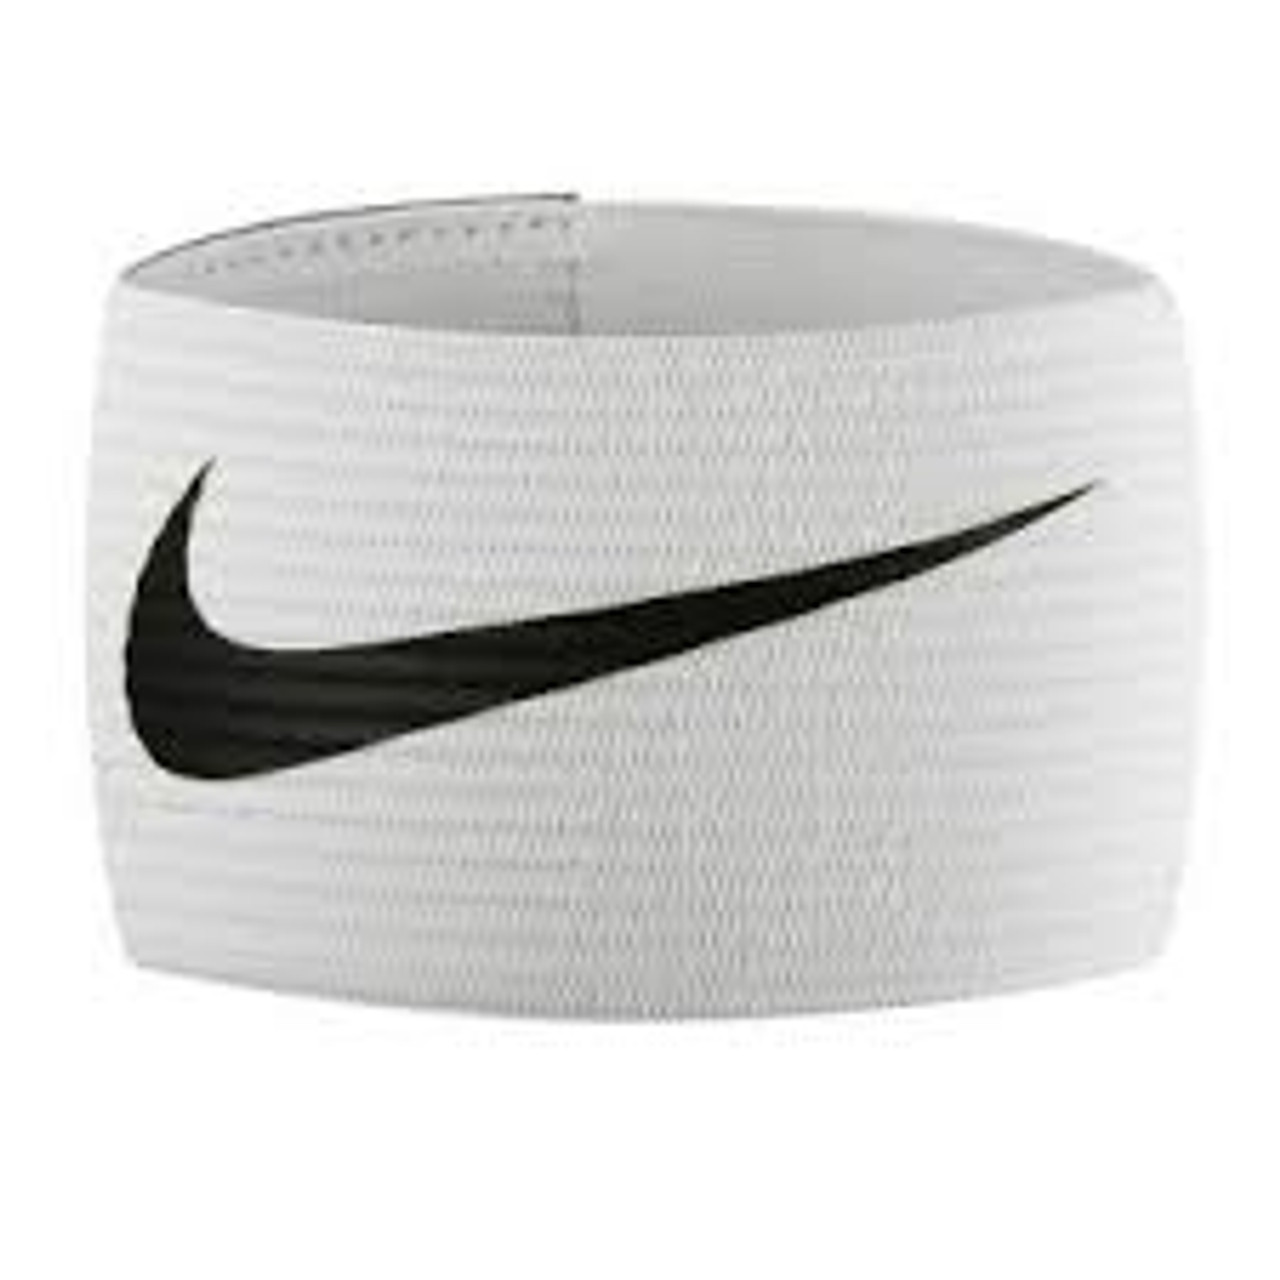 Nike Futbol Armband 2.0 - White - ohp soccer